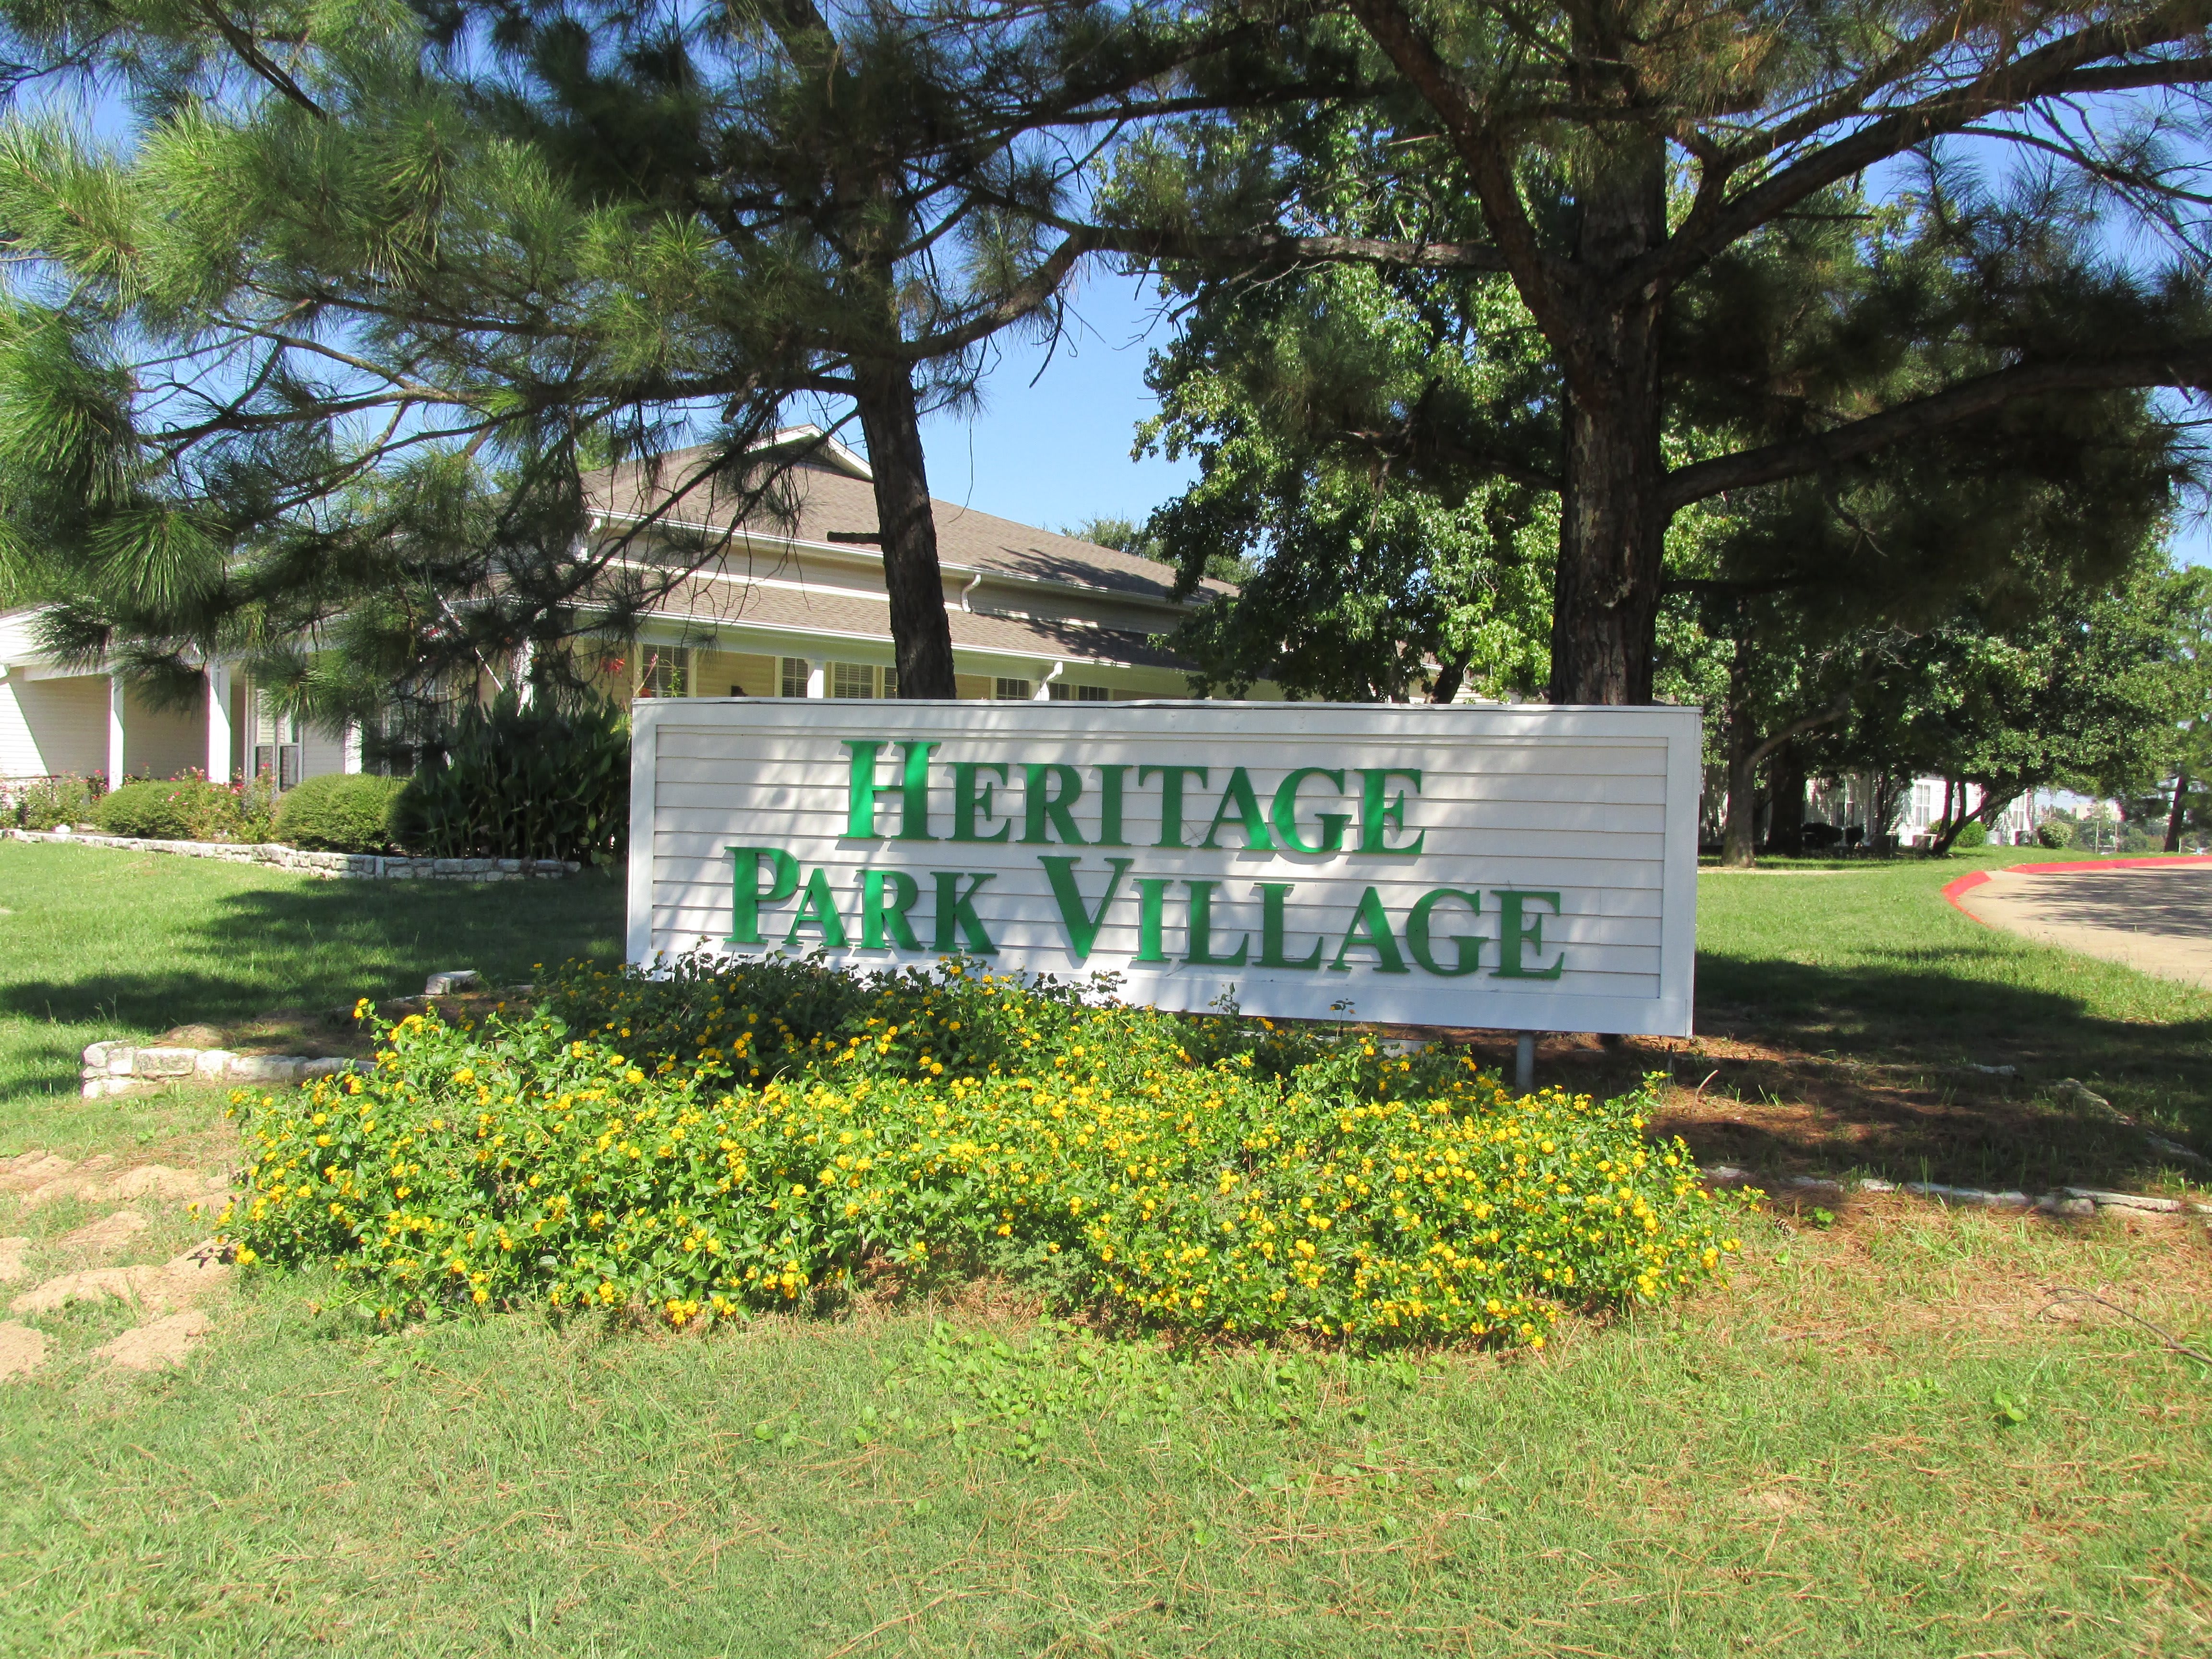 Heritage Park Village 